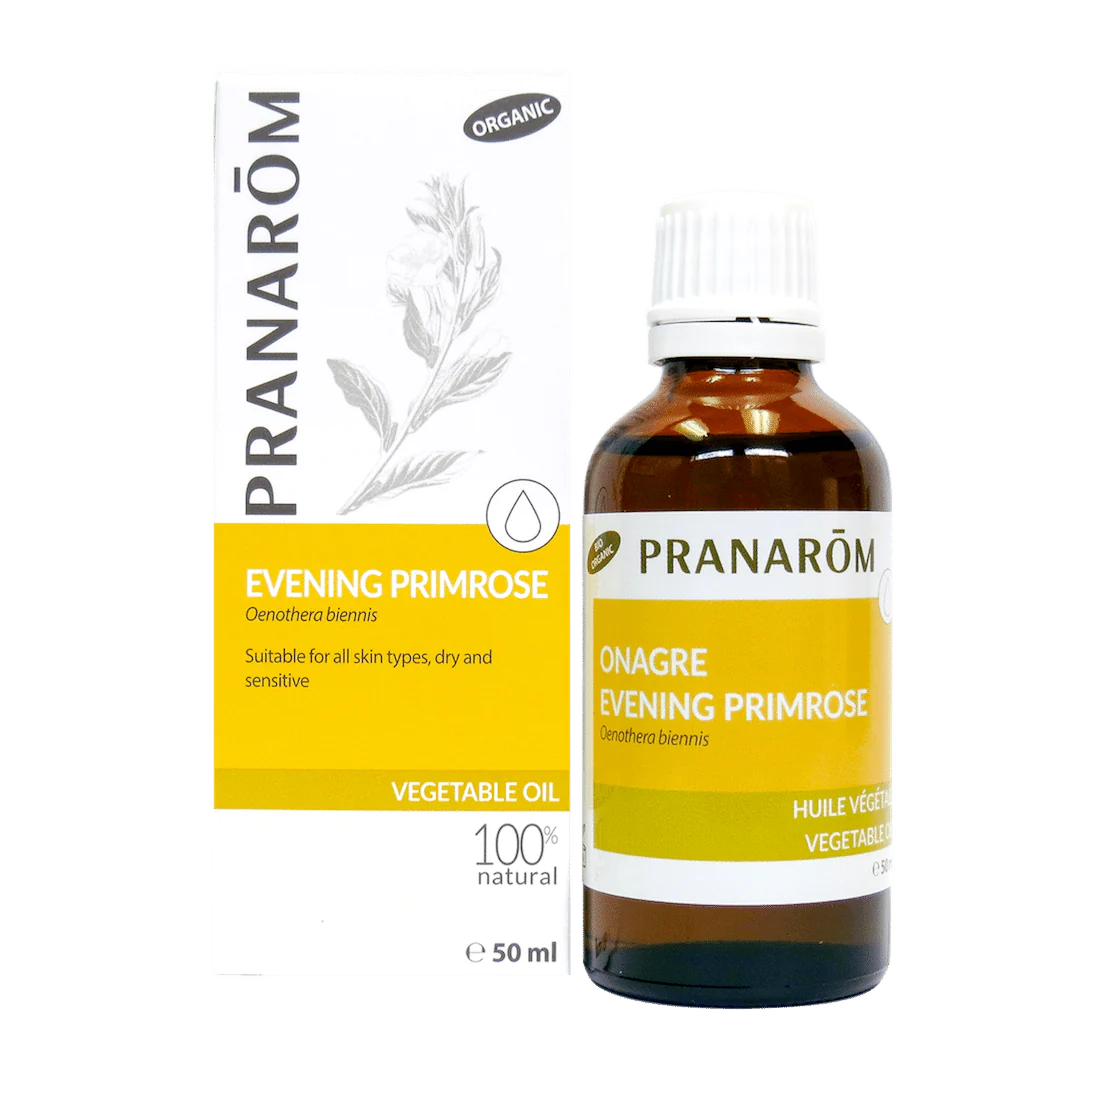 Evening Primrose 100% Natural Vegetable Oil – Organic 50 ml